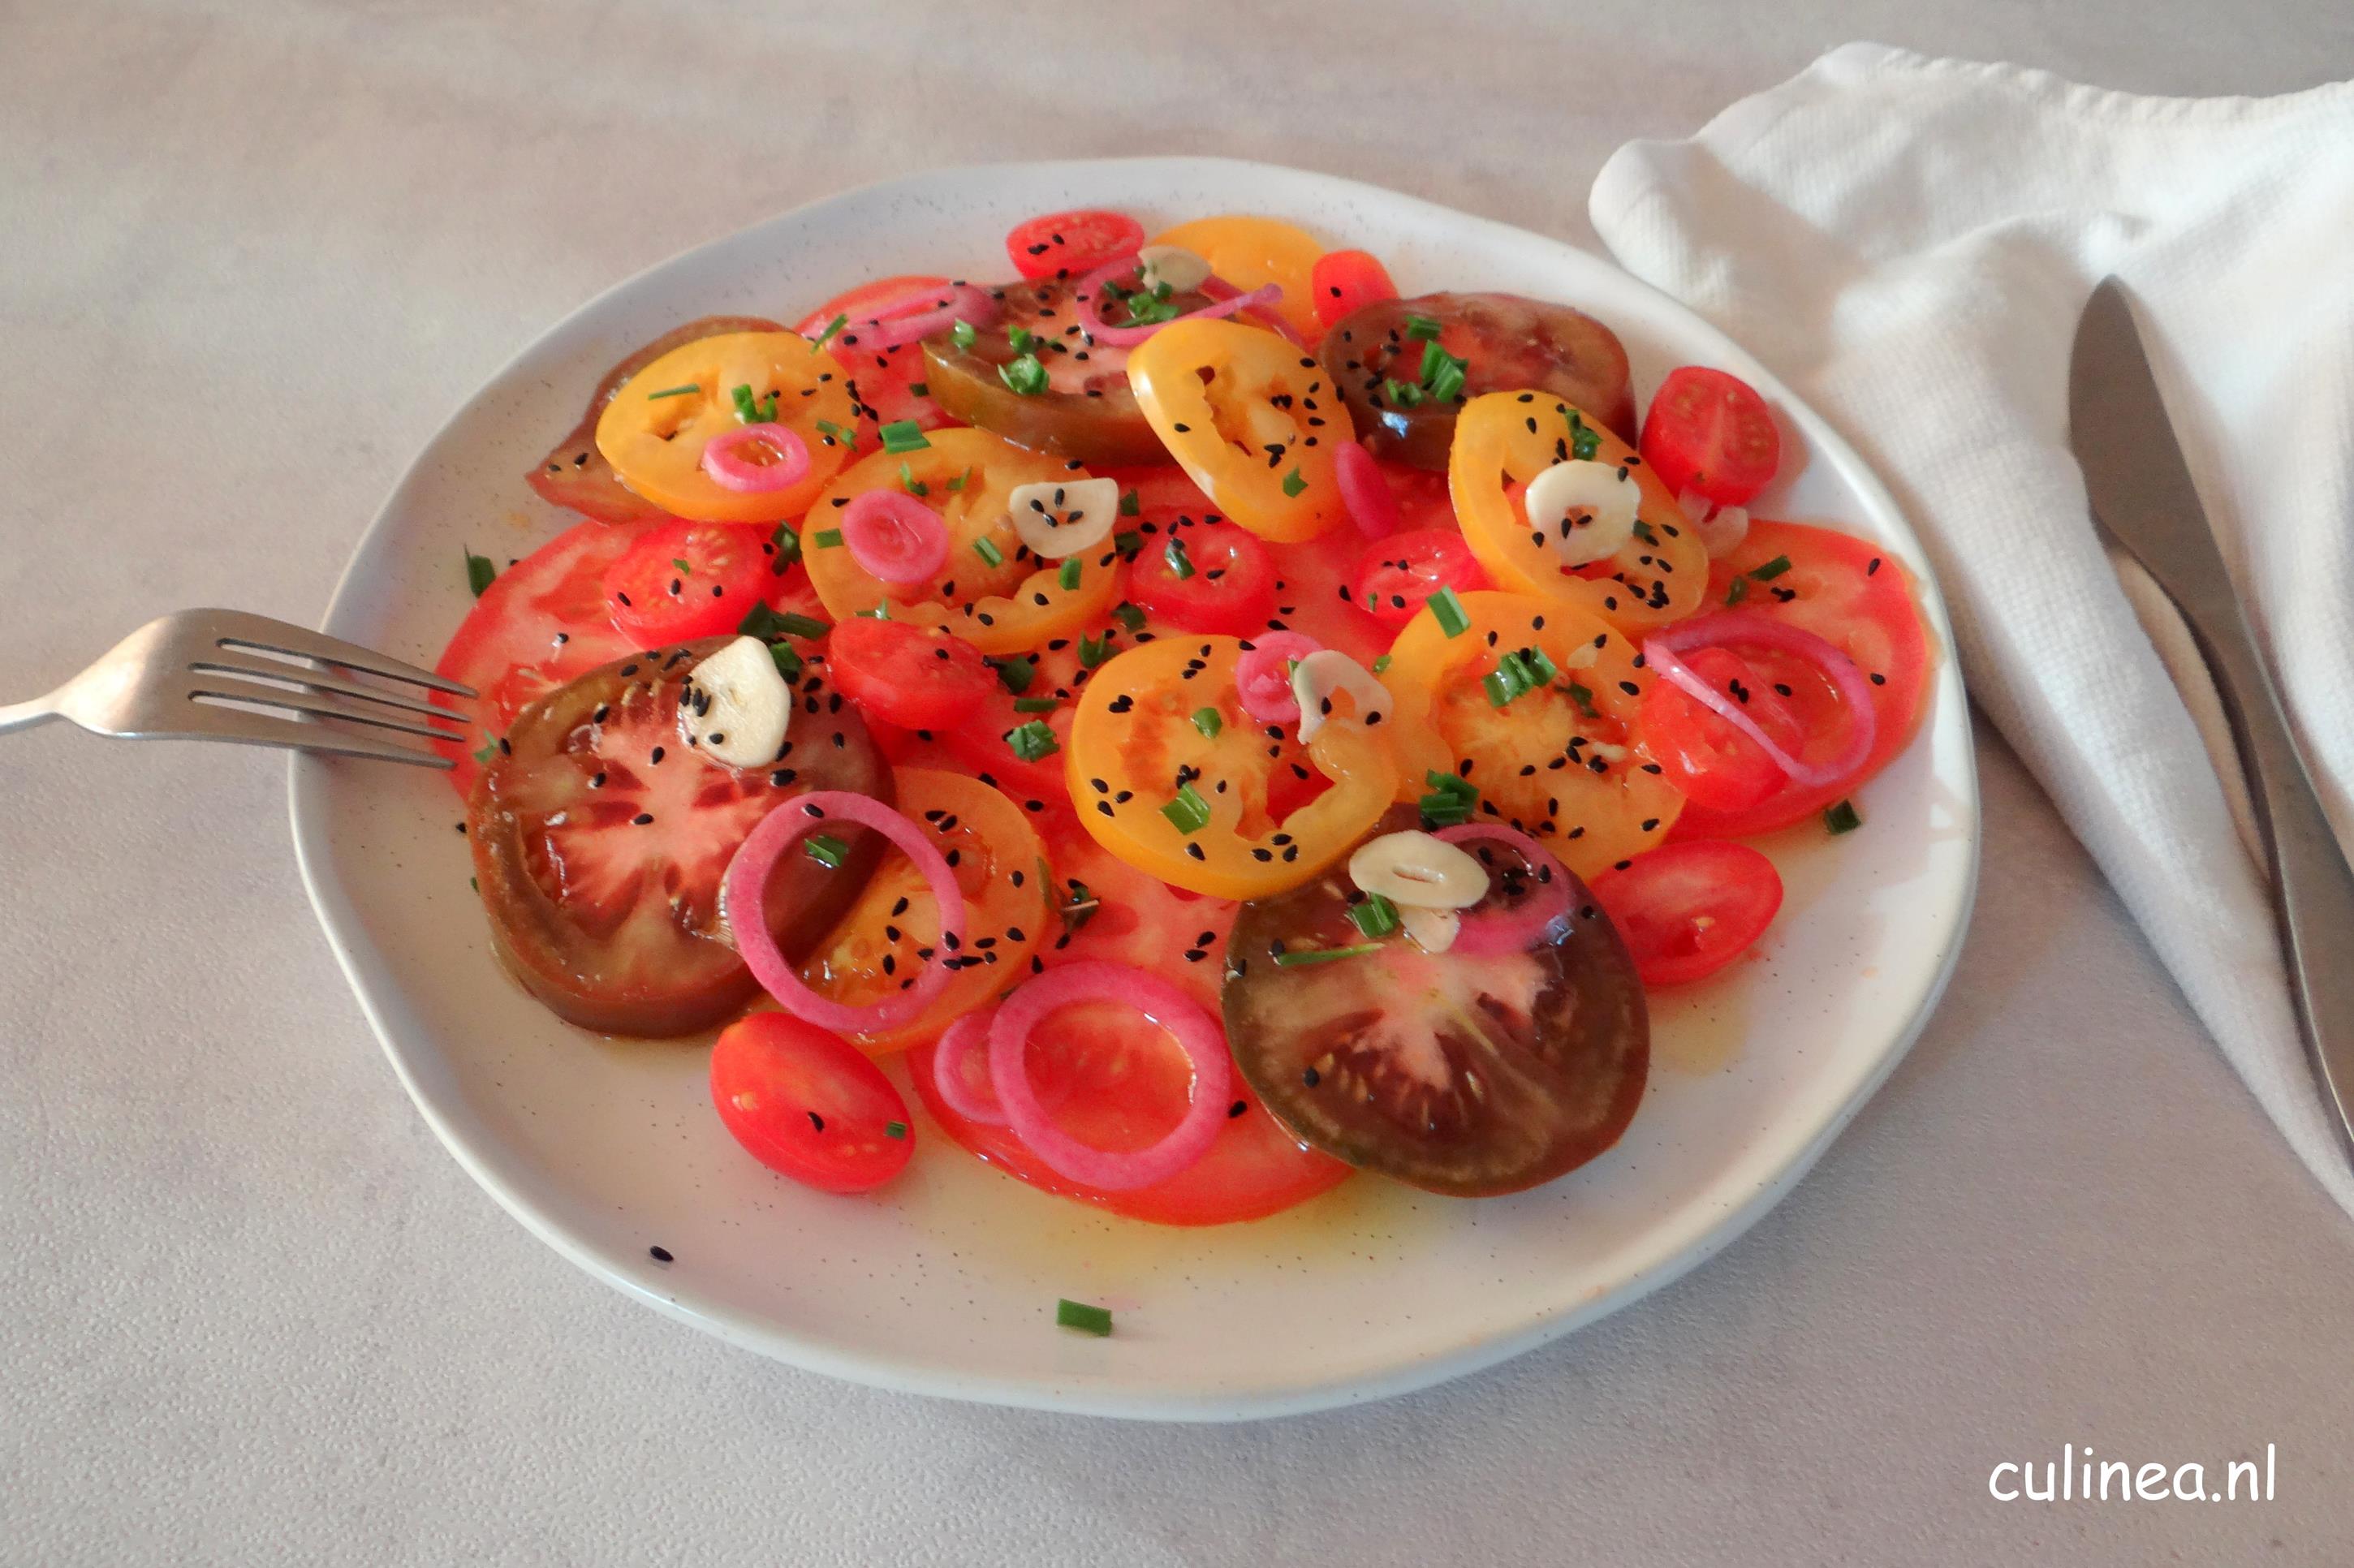 Tomatensalade met warme knoflookdressing 8 (Copy) - Culinea.nl;